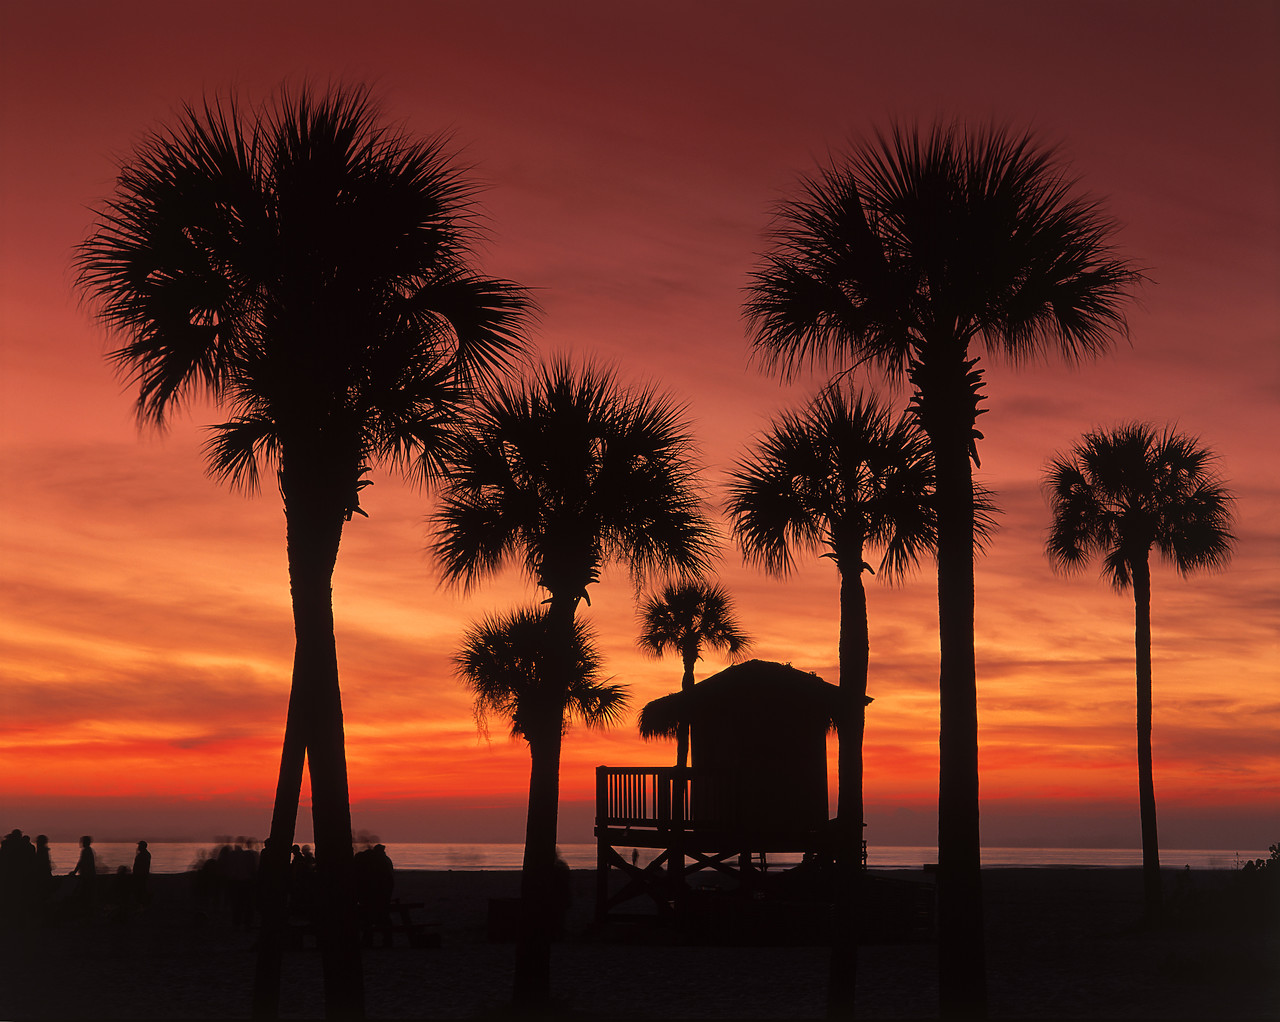 #010279-3 - Lifeguard Hut & Palms at Sunset, Siesta Key, Florida, USA